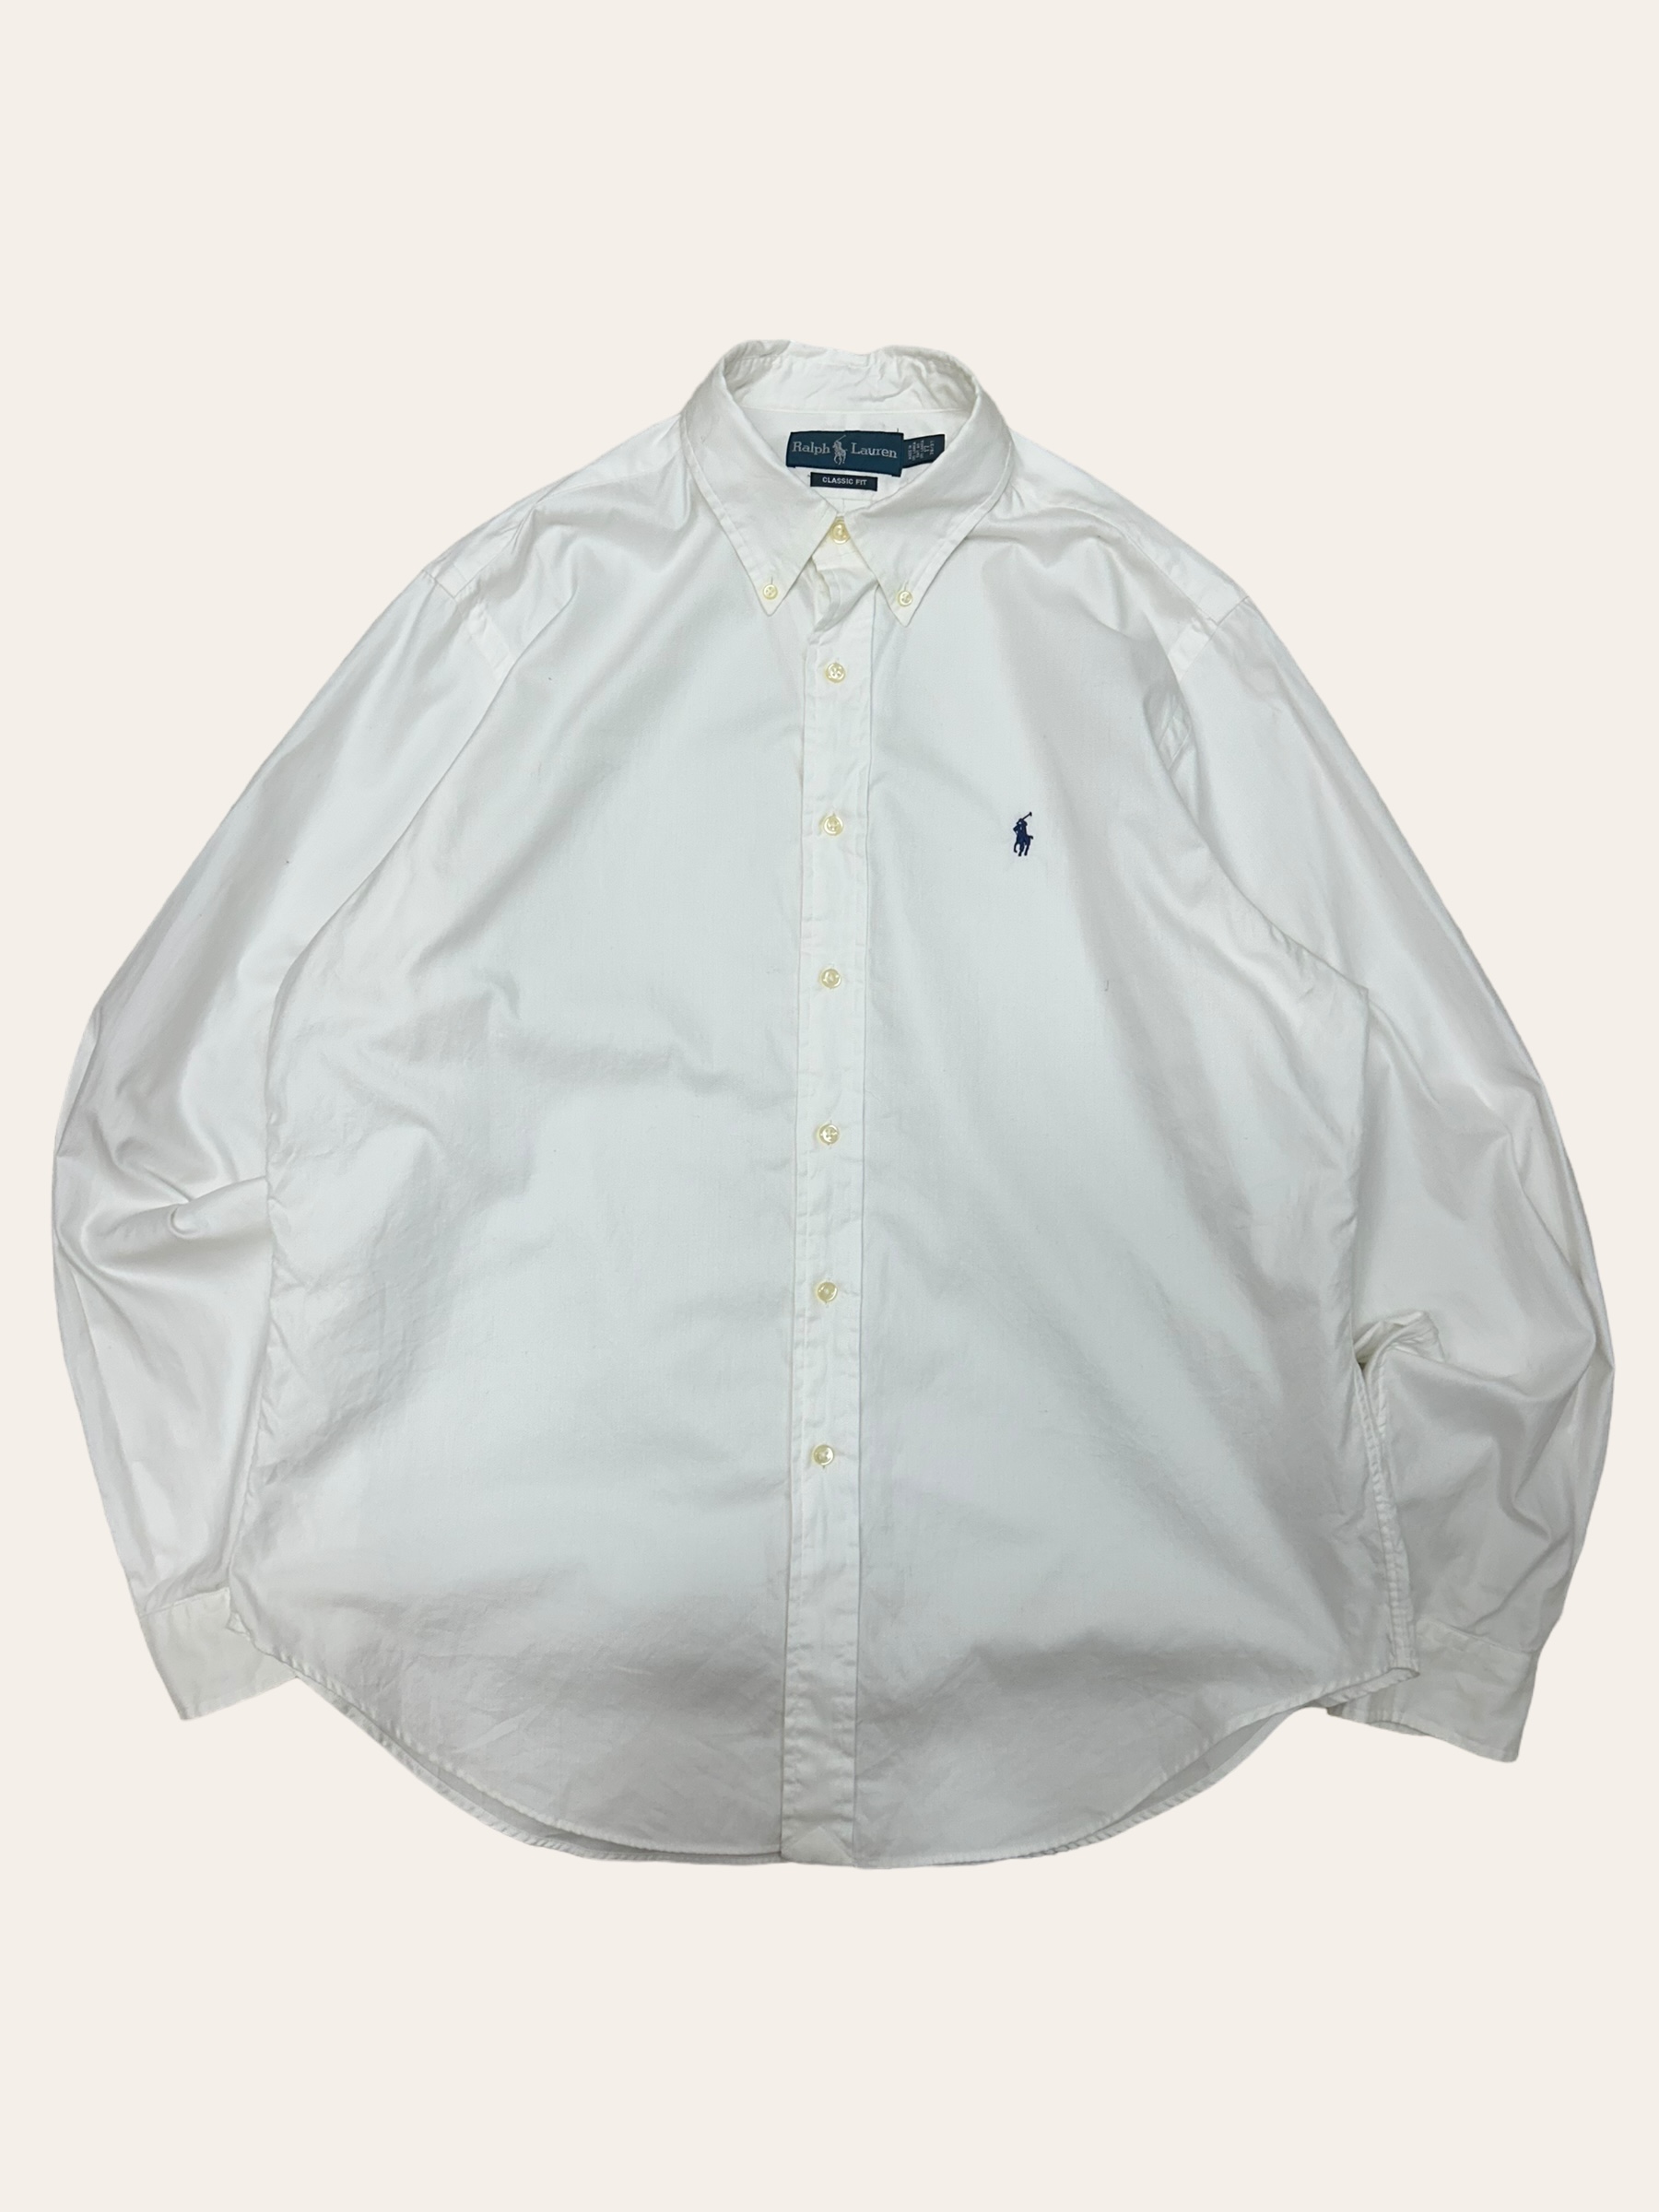 Polo ralph lauren white poplin shirt 17.5